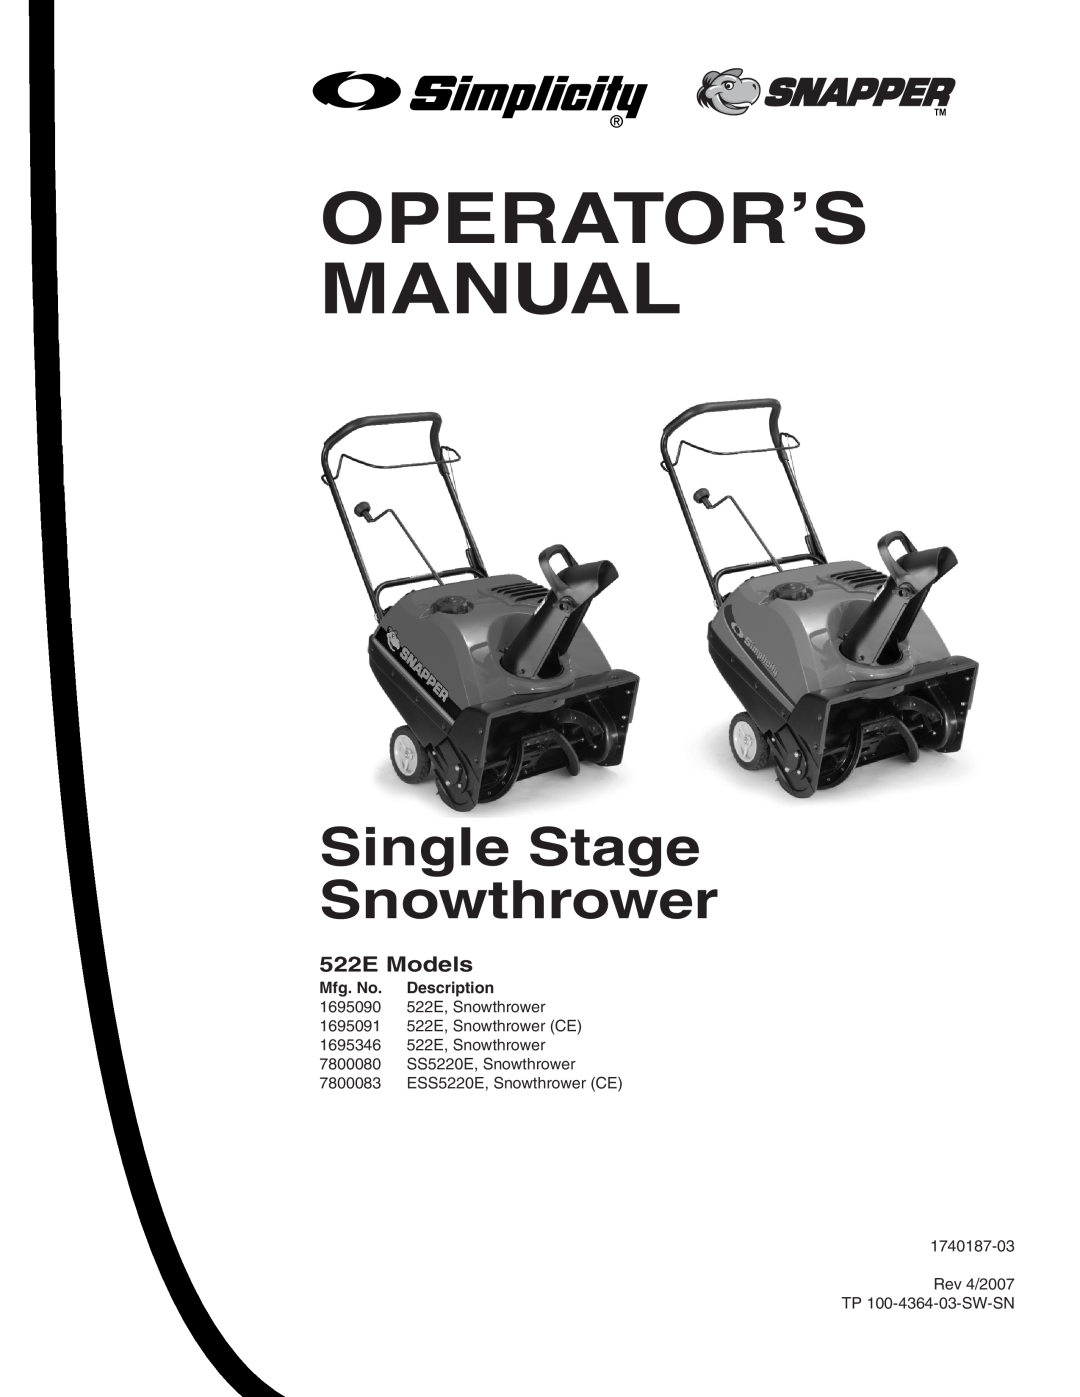 Snapper 522E, 522E, 522E, SS5220E, ESS5220E manual 522E Models, Operator’S Manual, Single Stage Snowthrower 